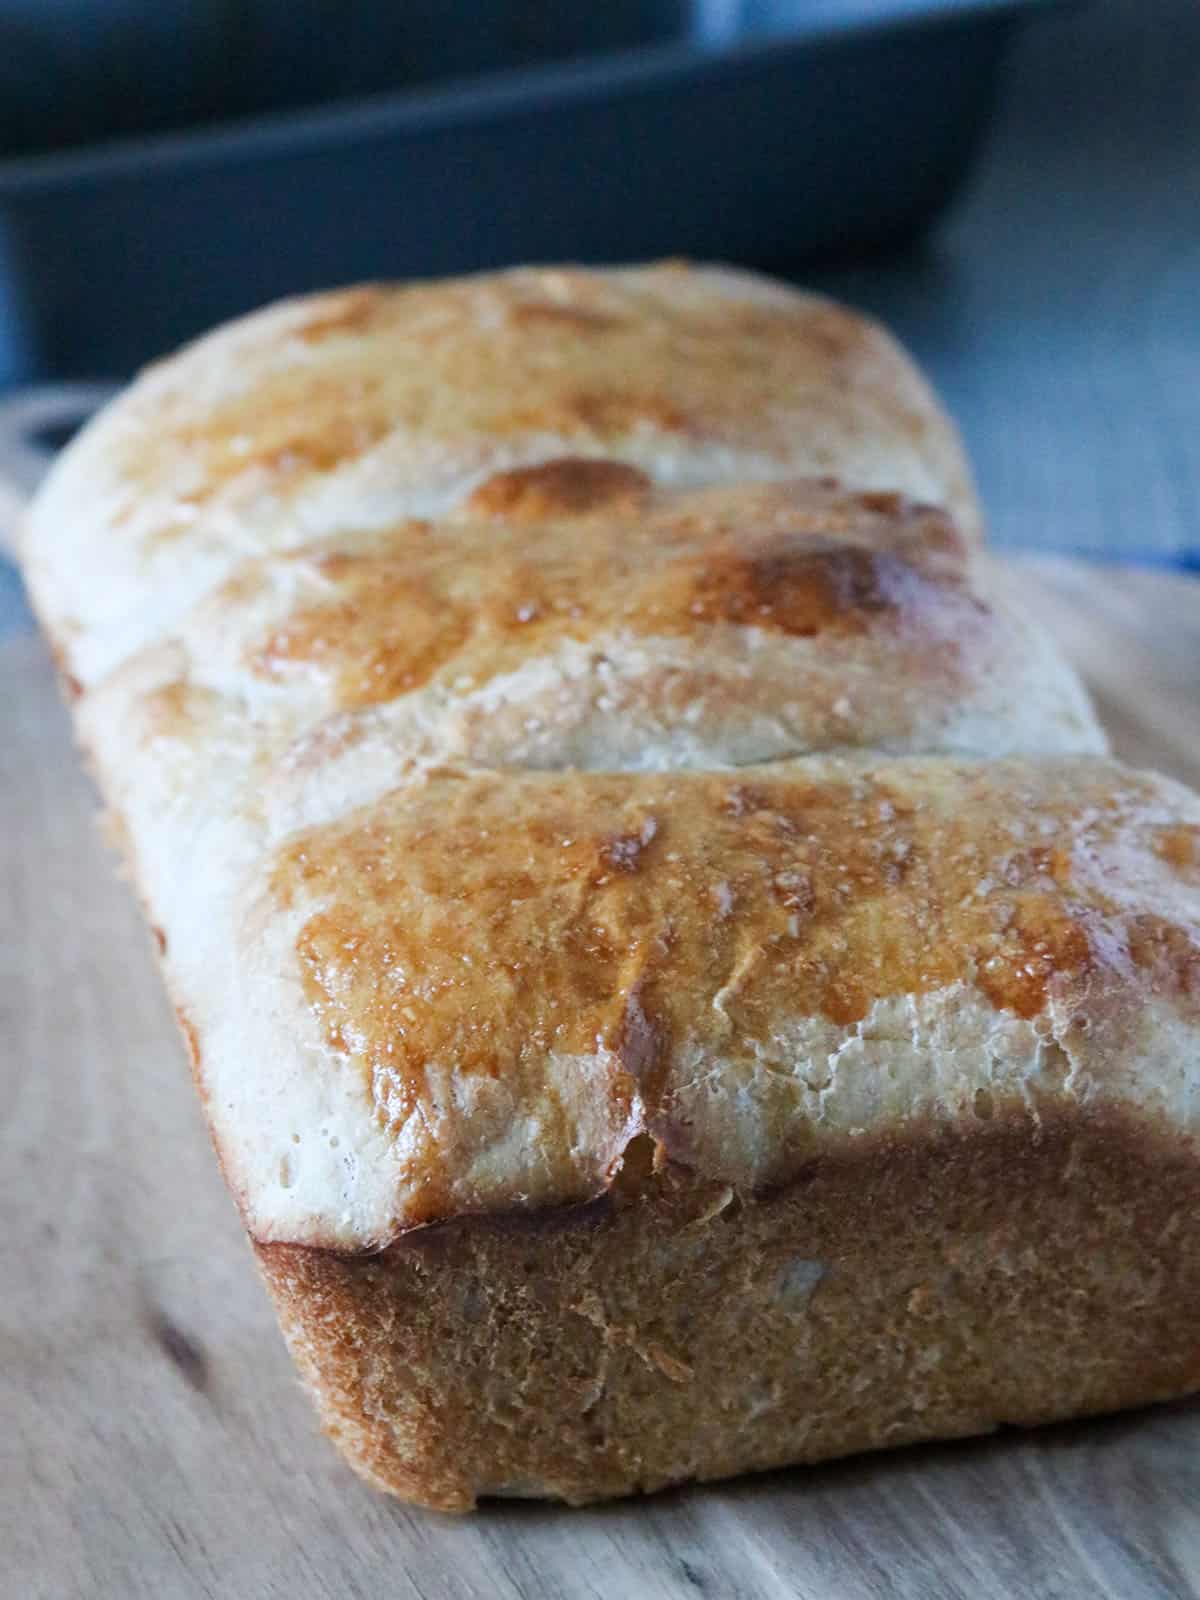 The freshly baked loaf bread.